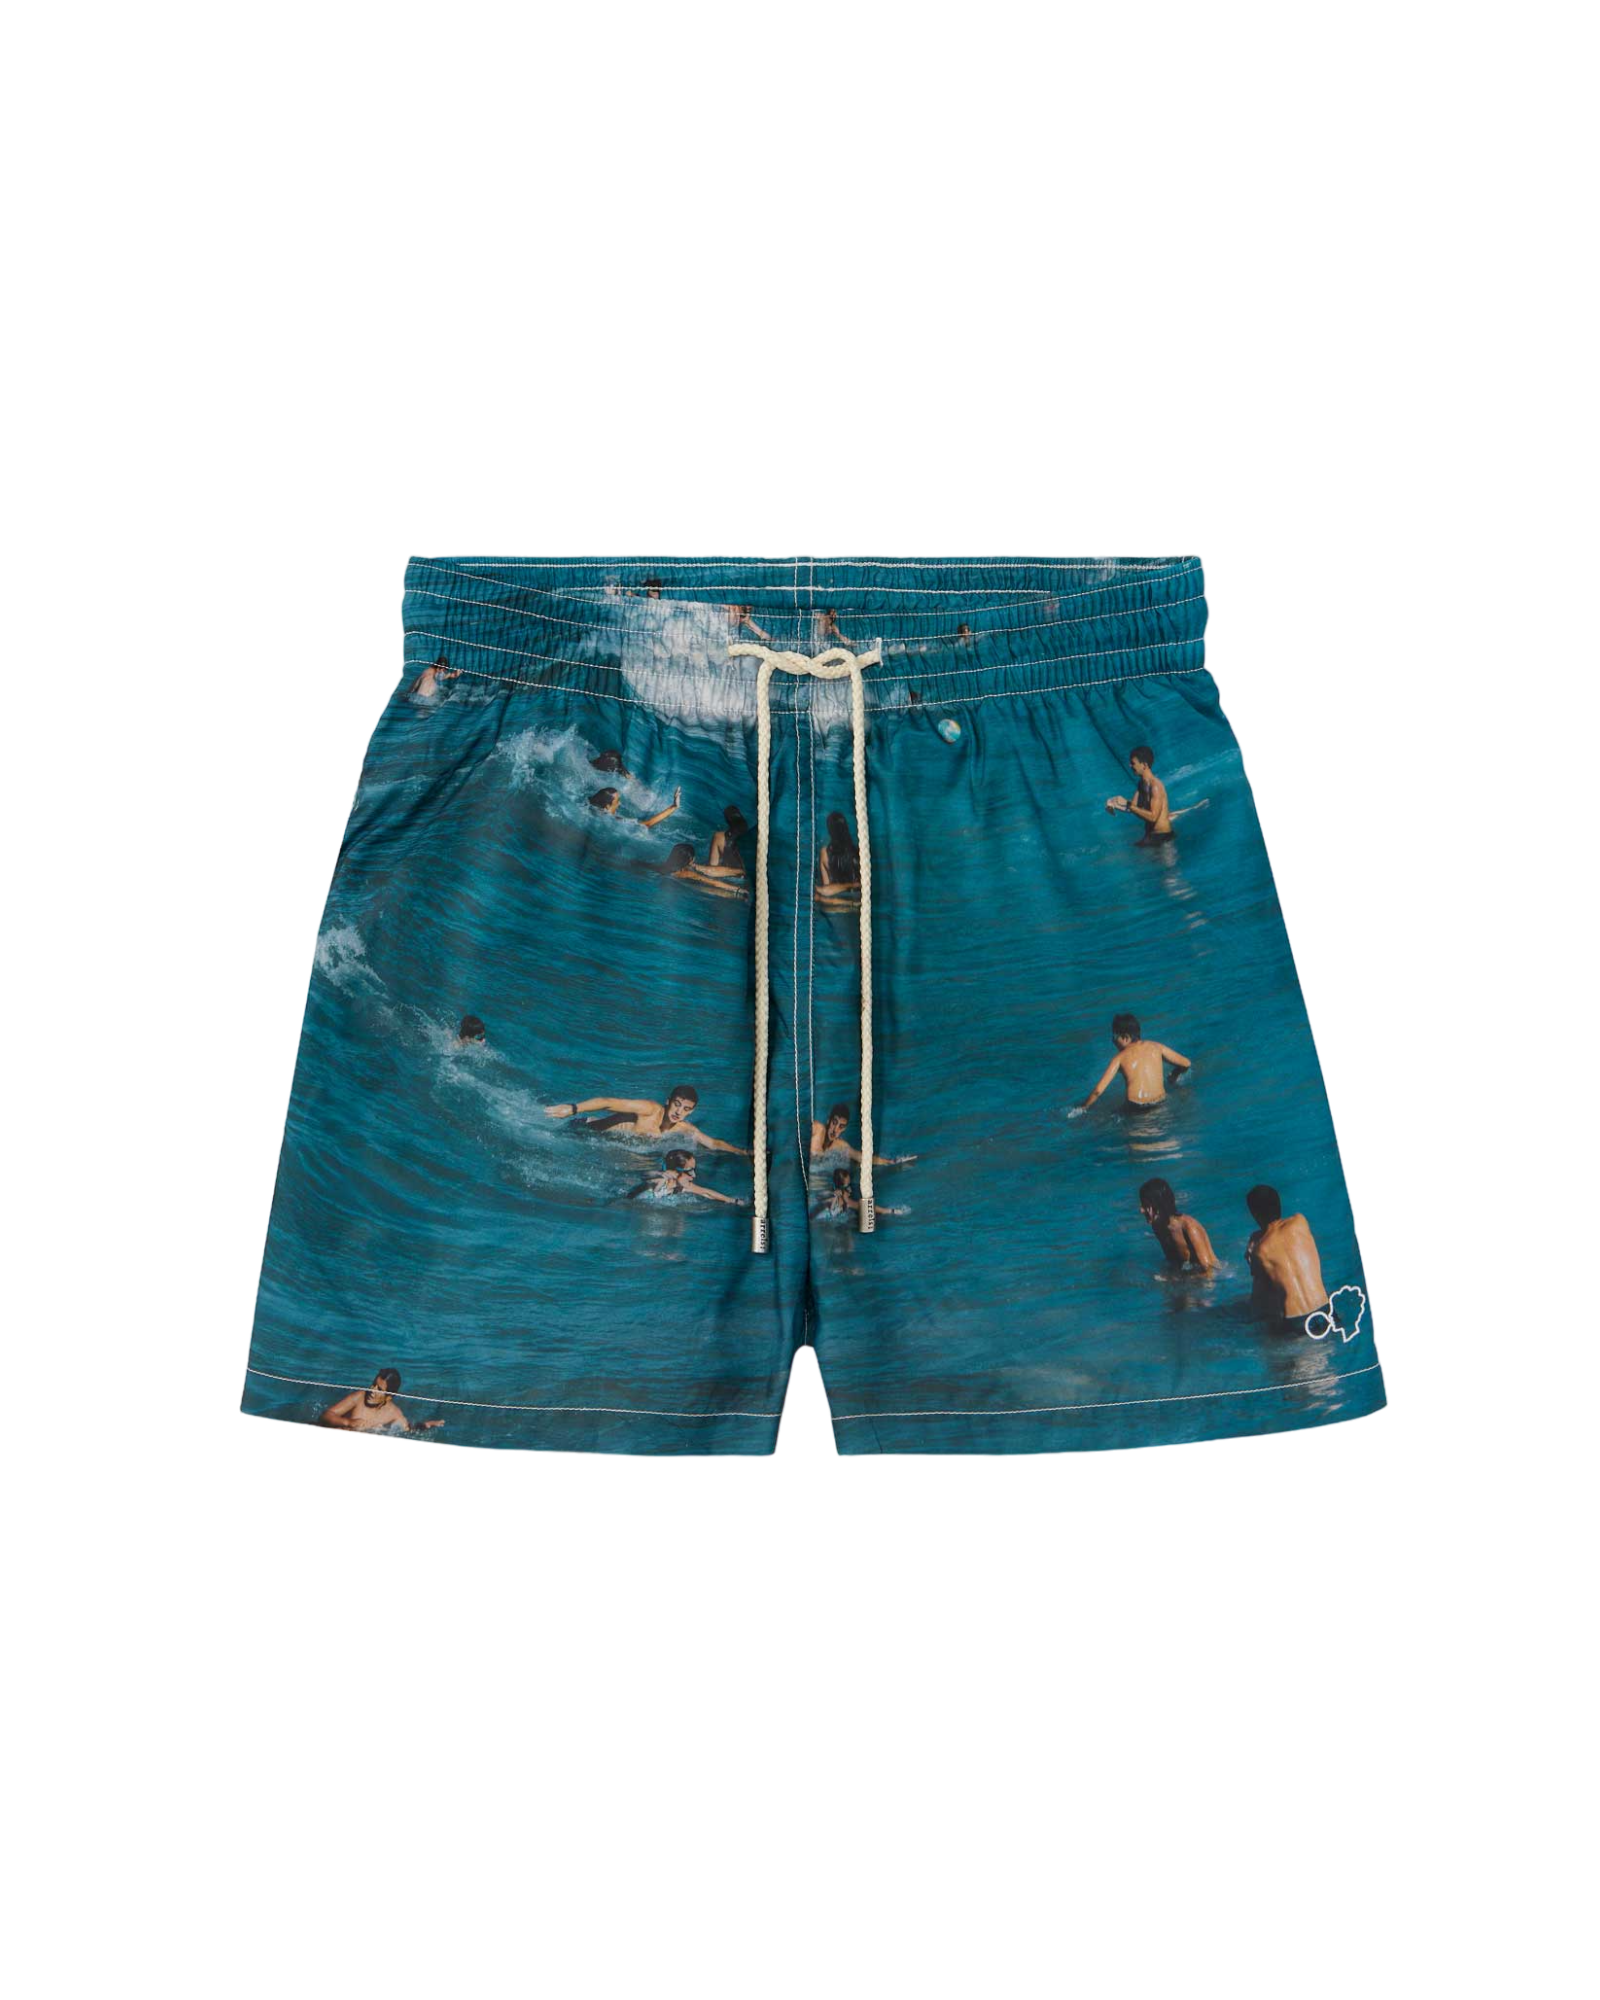 Blue Olas swim shorts